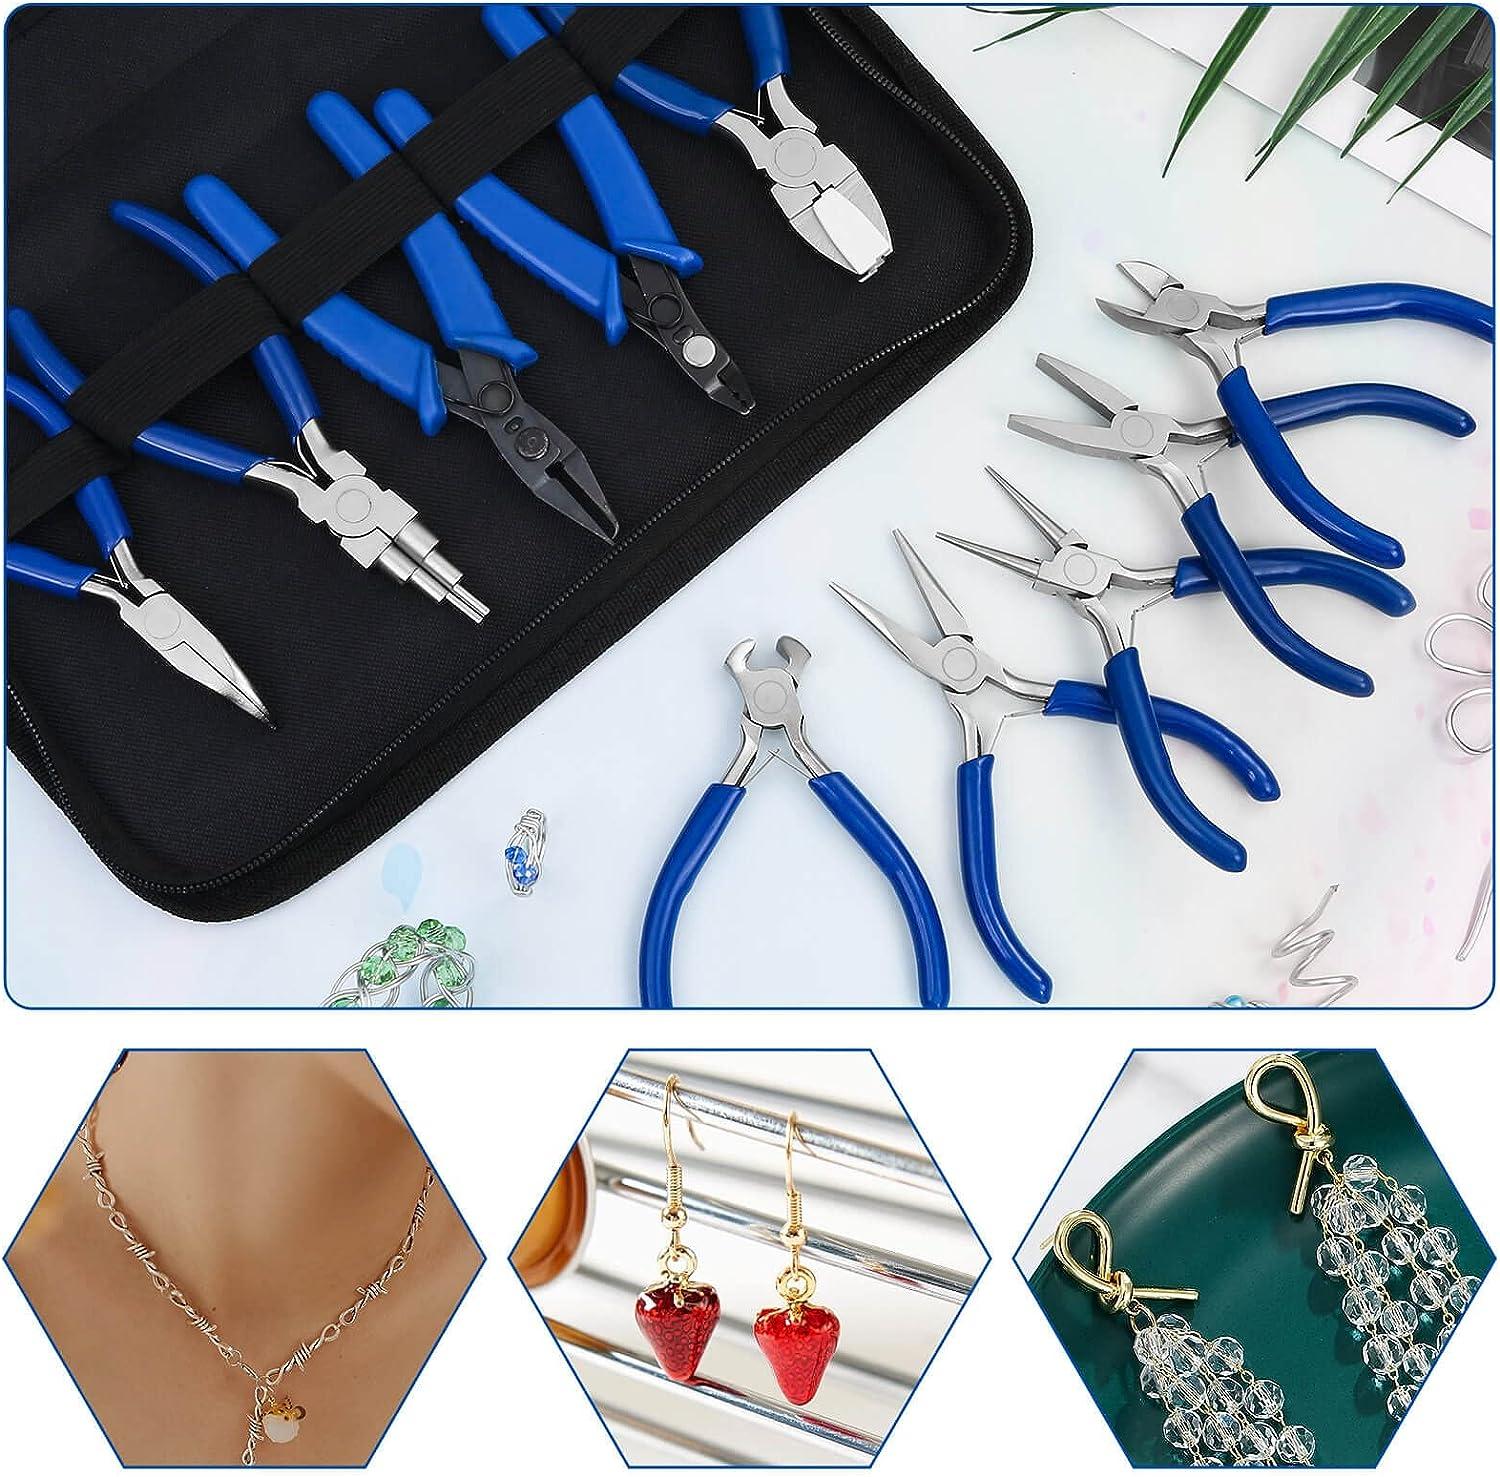 Jewelry Pliers Shynek Set of 10 Professional Jewelry Making Pliers